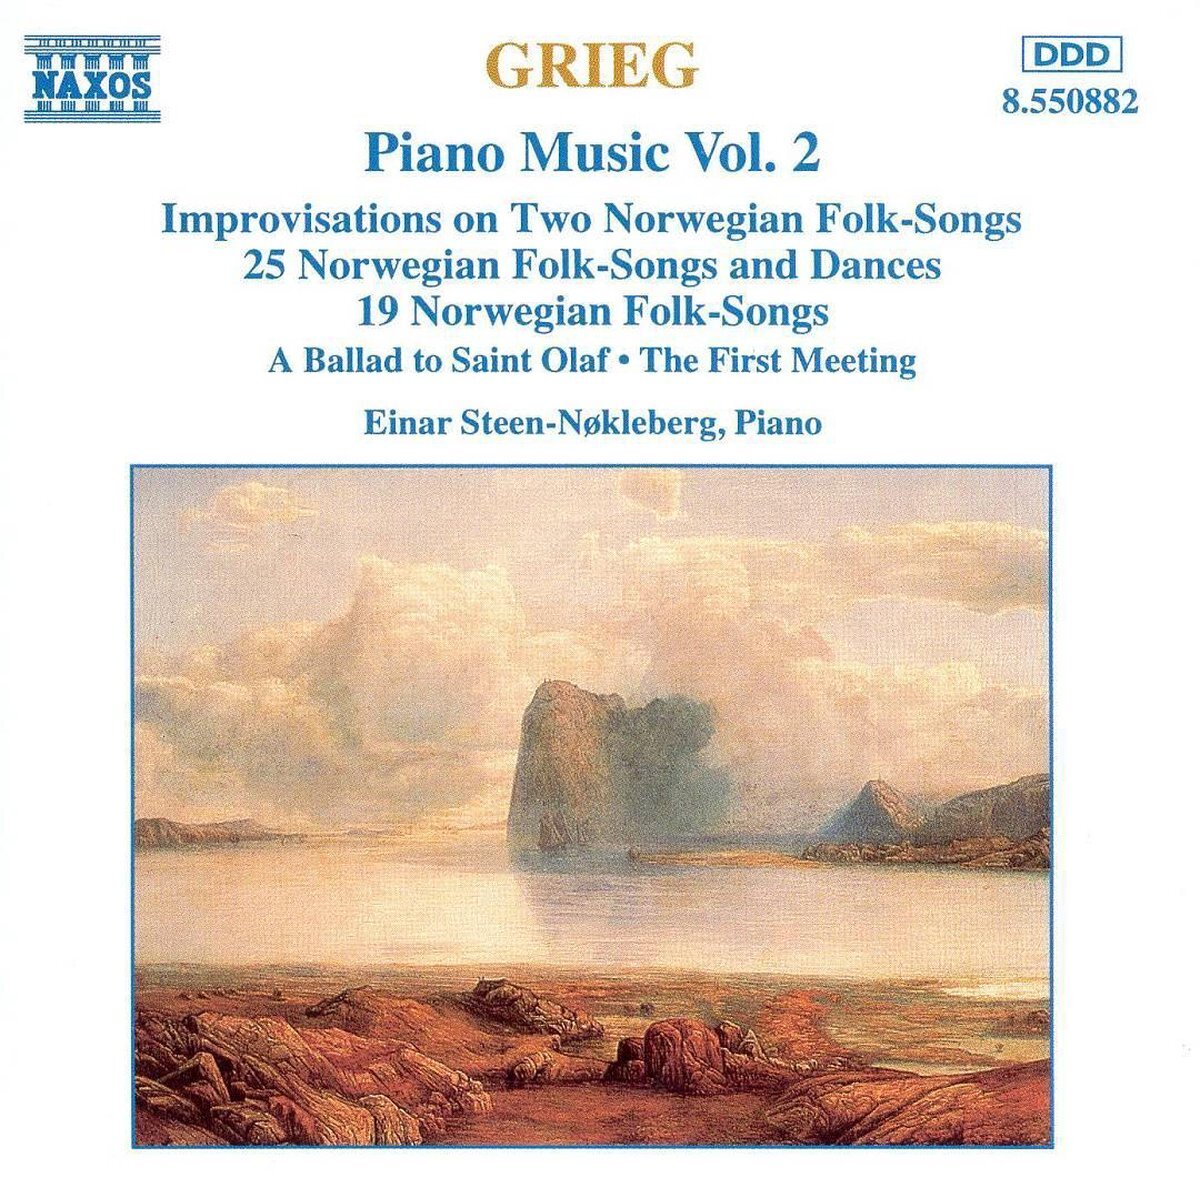 OUTHERE Grieg: Piano Music Vol 2 / Einar Steen-Nokleberg